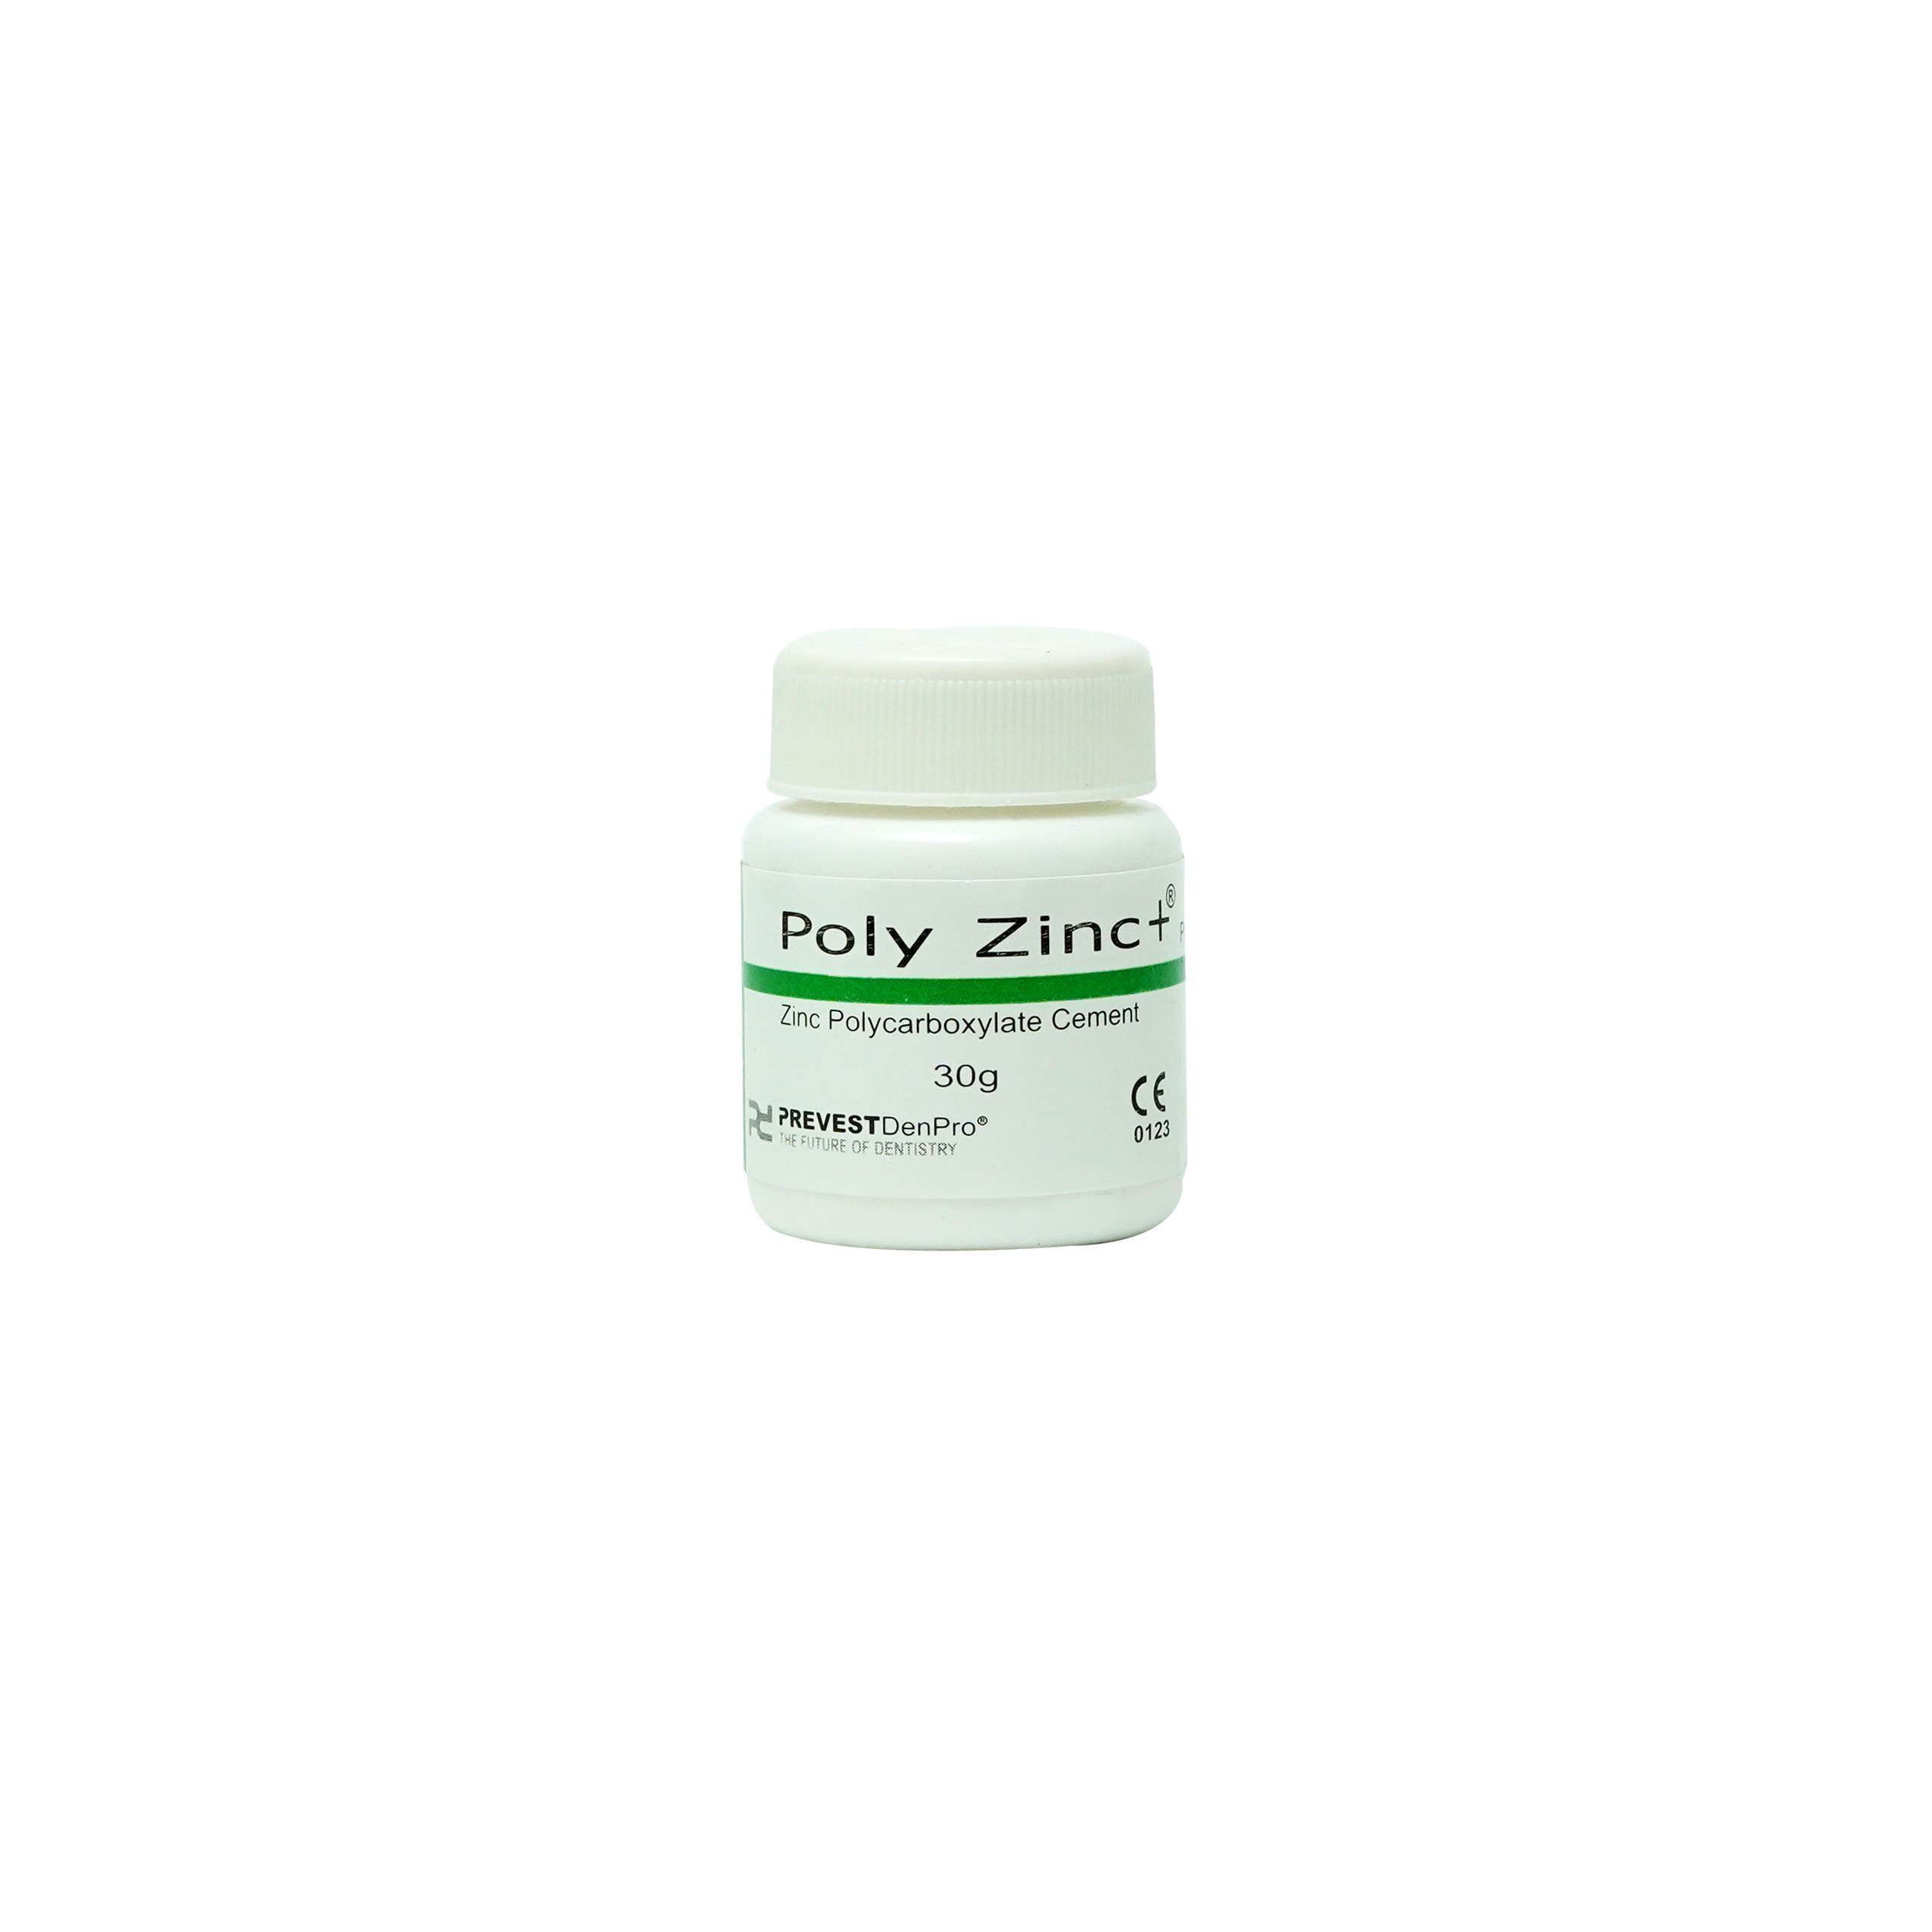 Prevest Denpro Poly Zinc+ Zinc Polycarboxylate Cement